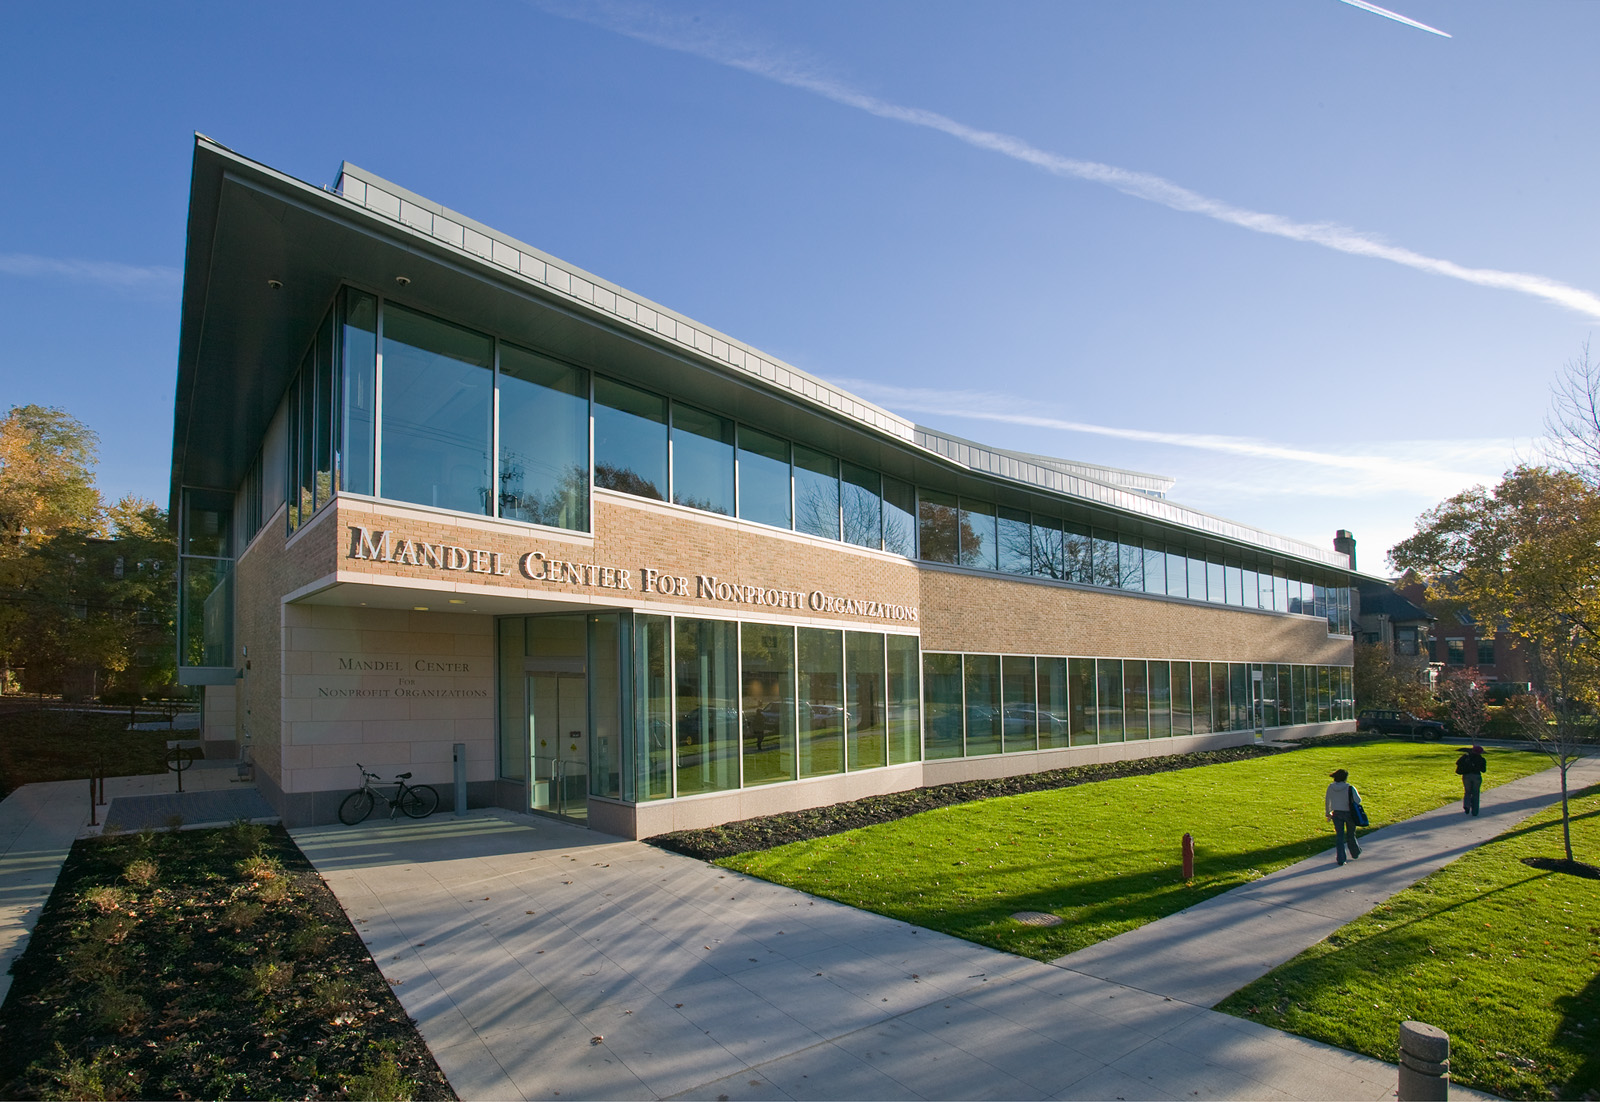 Case Western Reserve University Mandel Center for Nonprofit Organizations